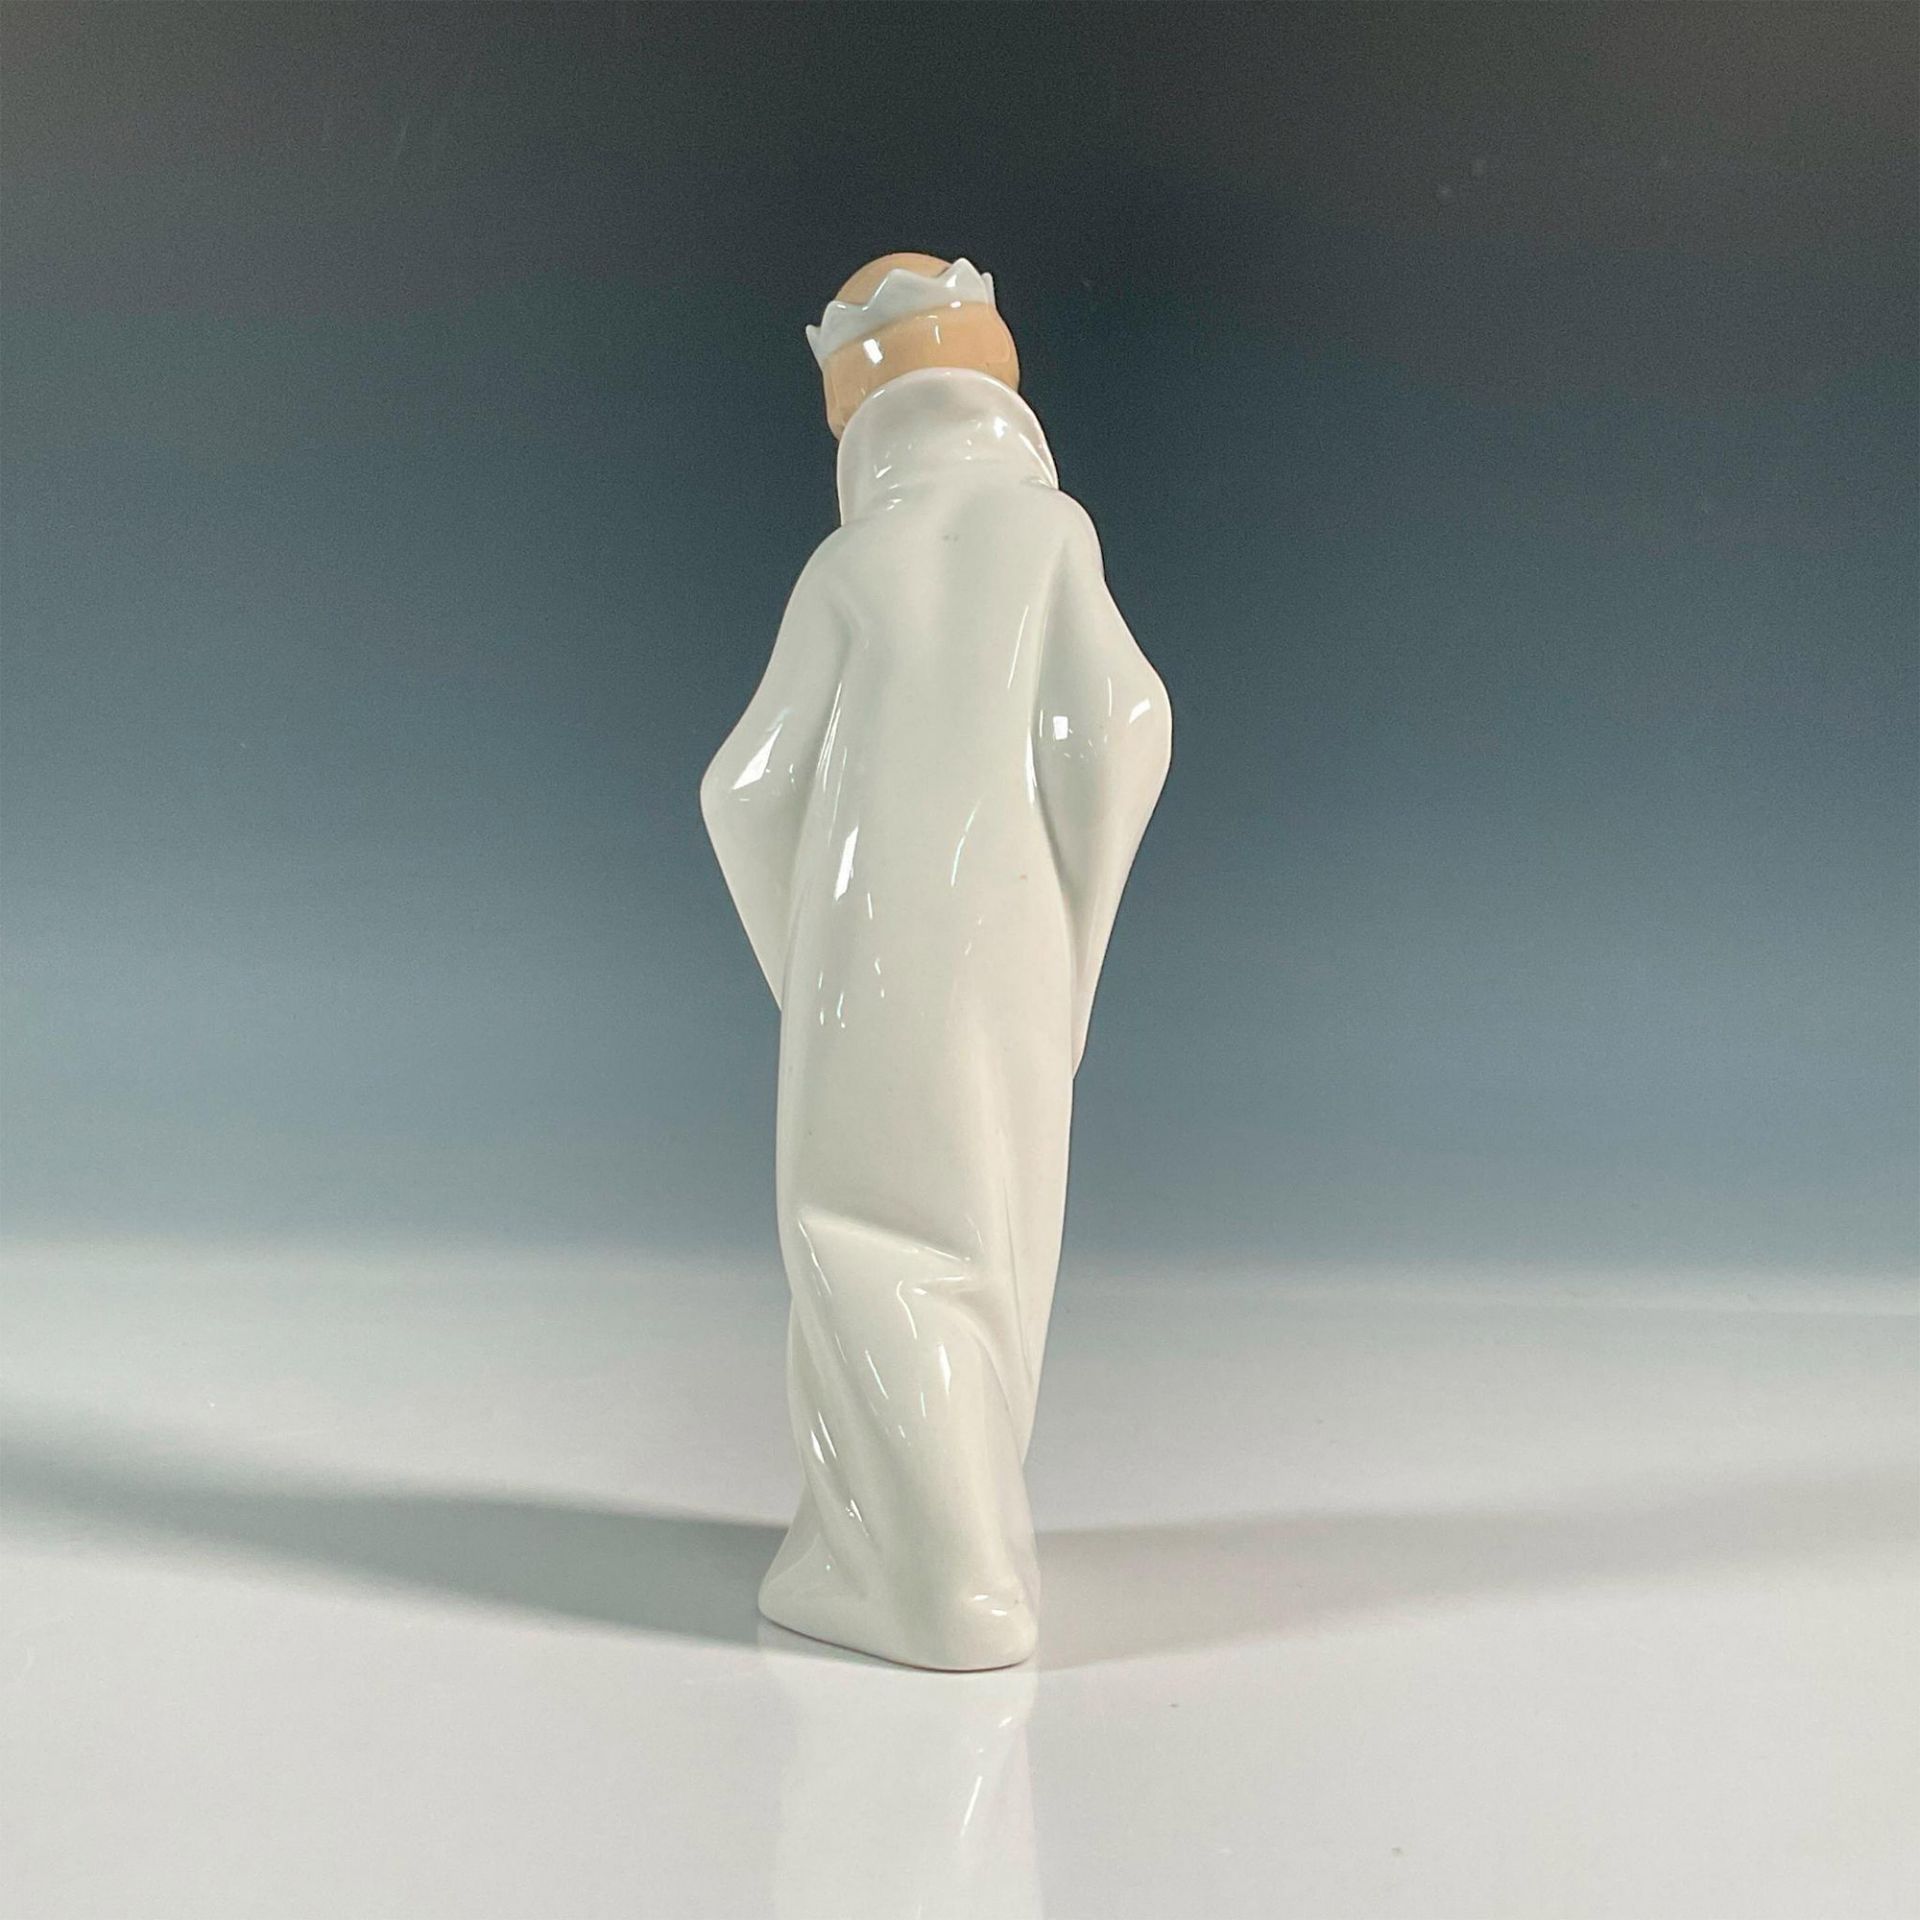 King Gasper 1004674 - Lladro Porcelain Figurine - Image 2 of 3